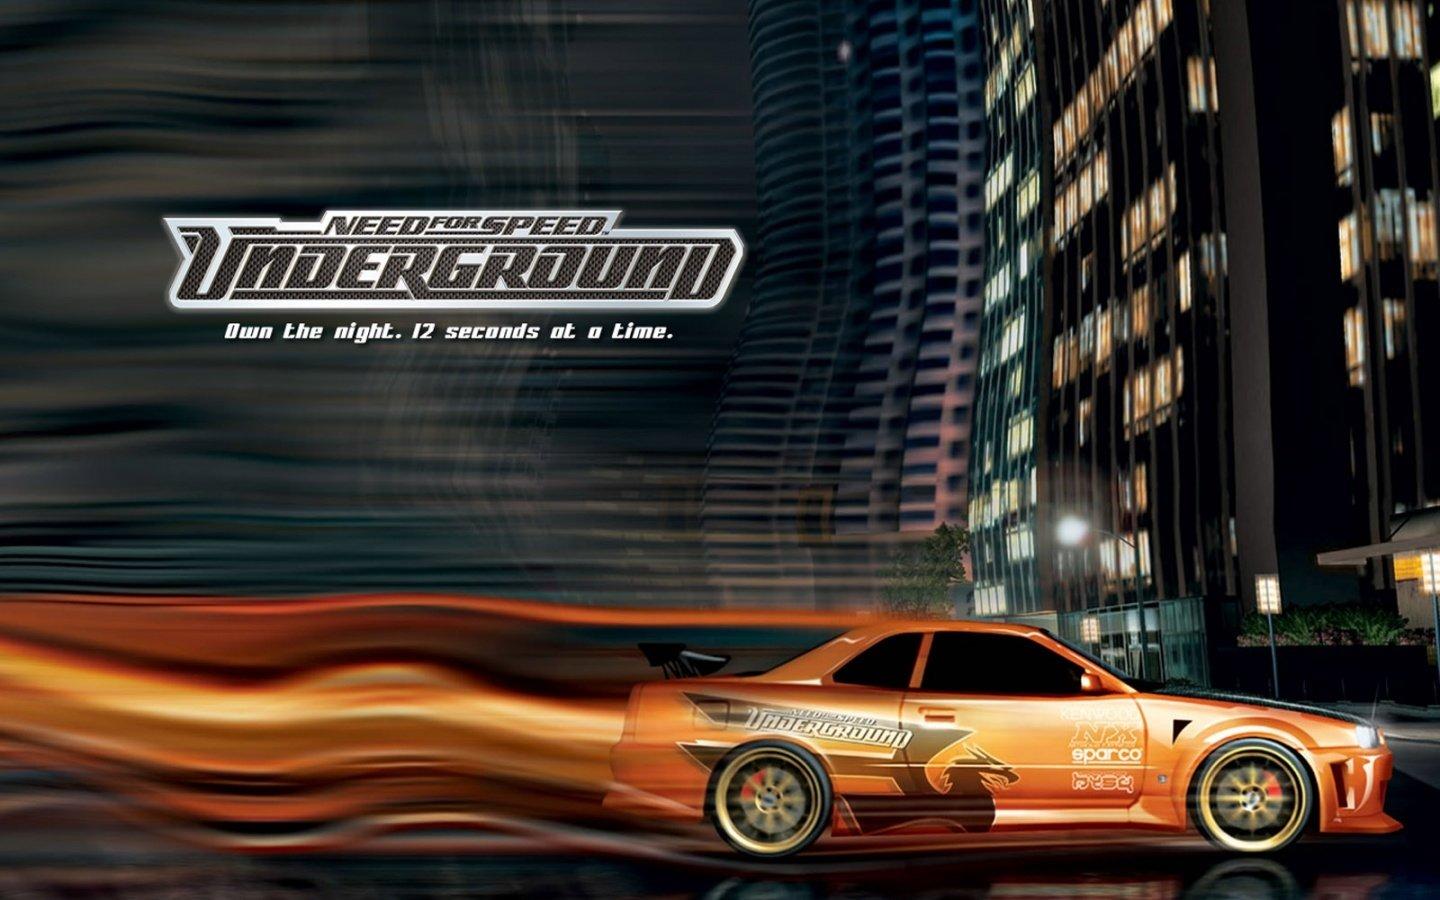 Need For Speed: Underground Wallpaper